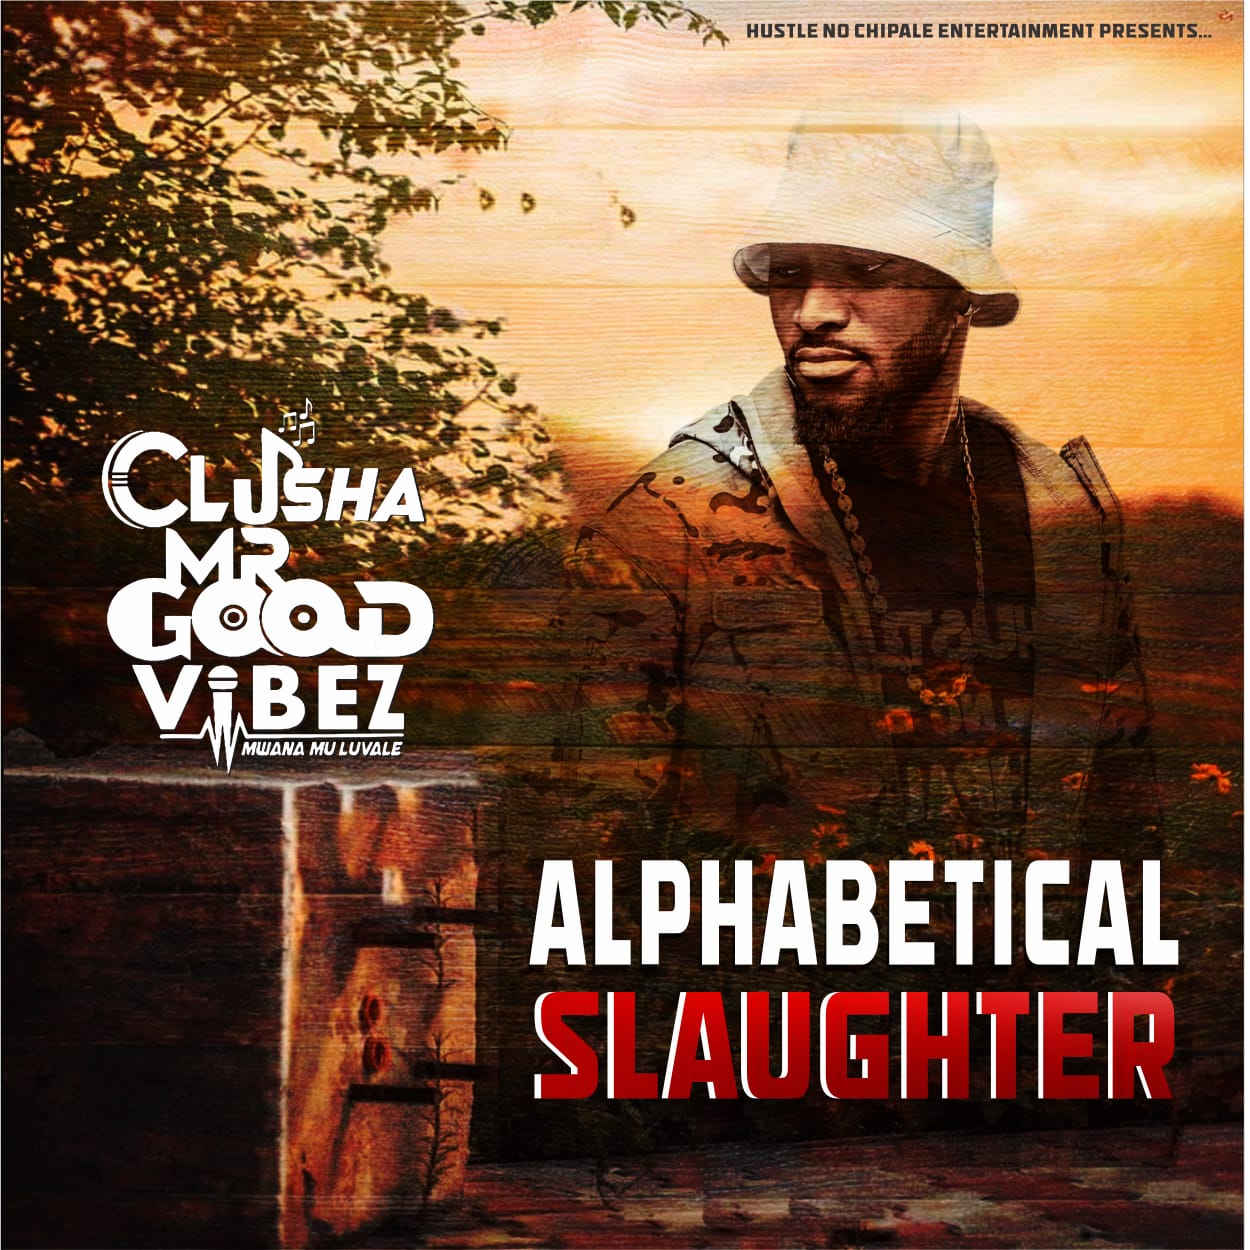 Clusha - Alphabetical Slaughter (Challenge)